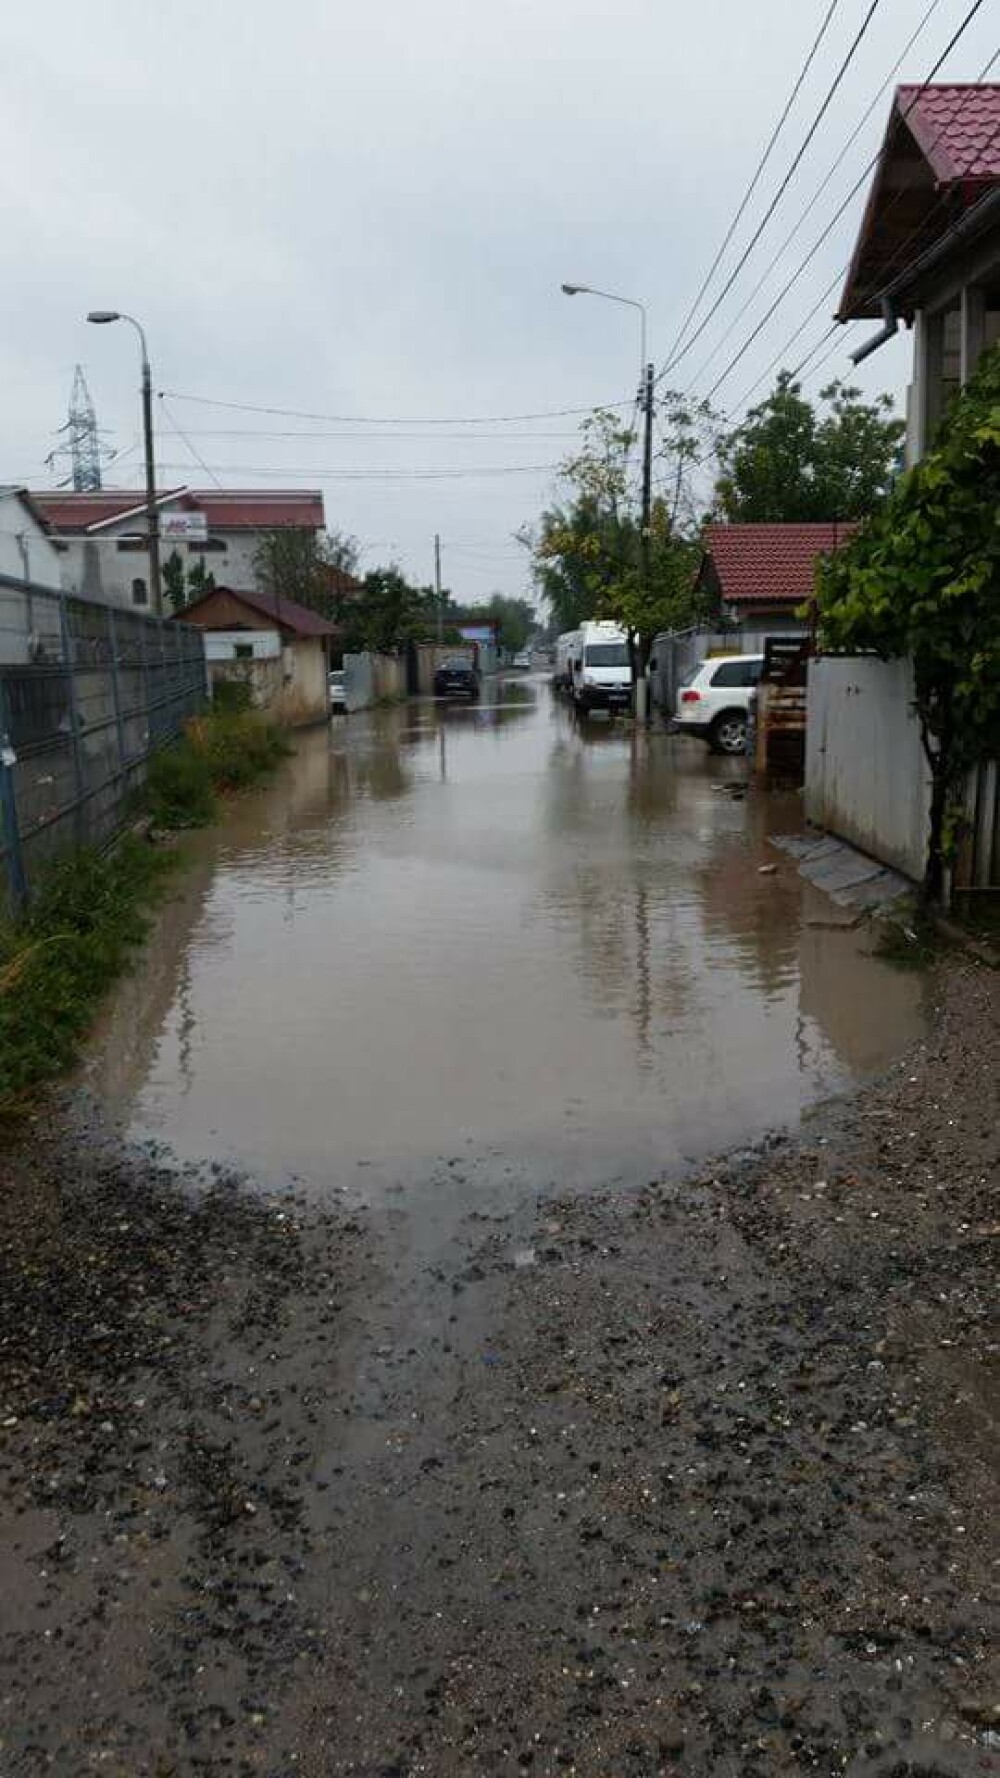 Cum arata o strada din Galati in momentul cand ploua. Localnicii, nevoiti sa mearga printr-un 